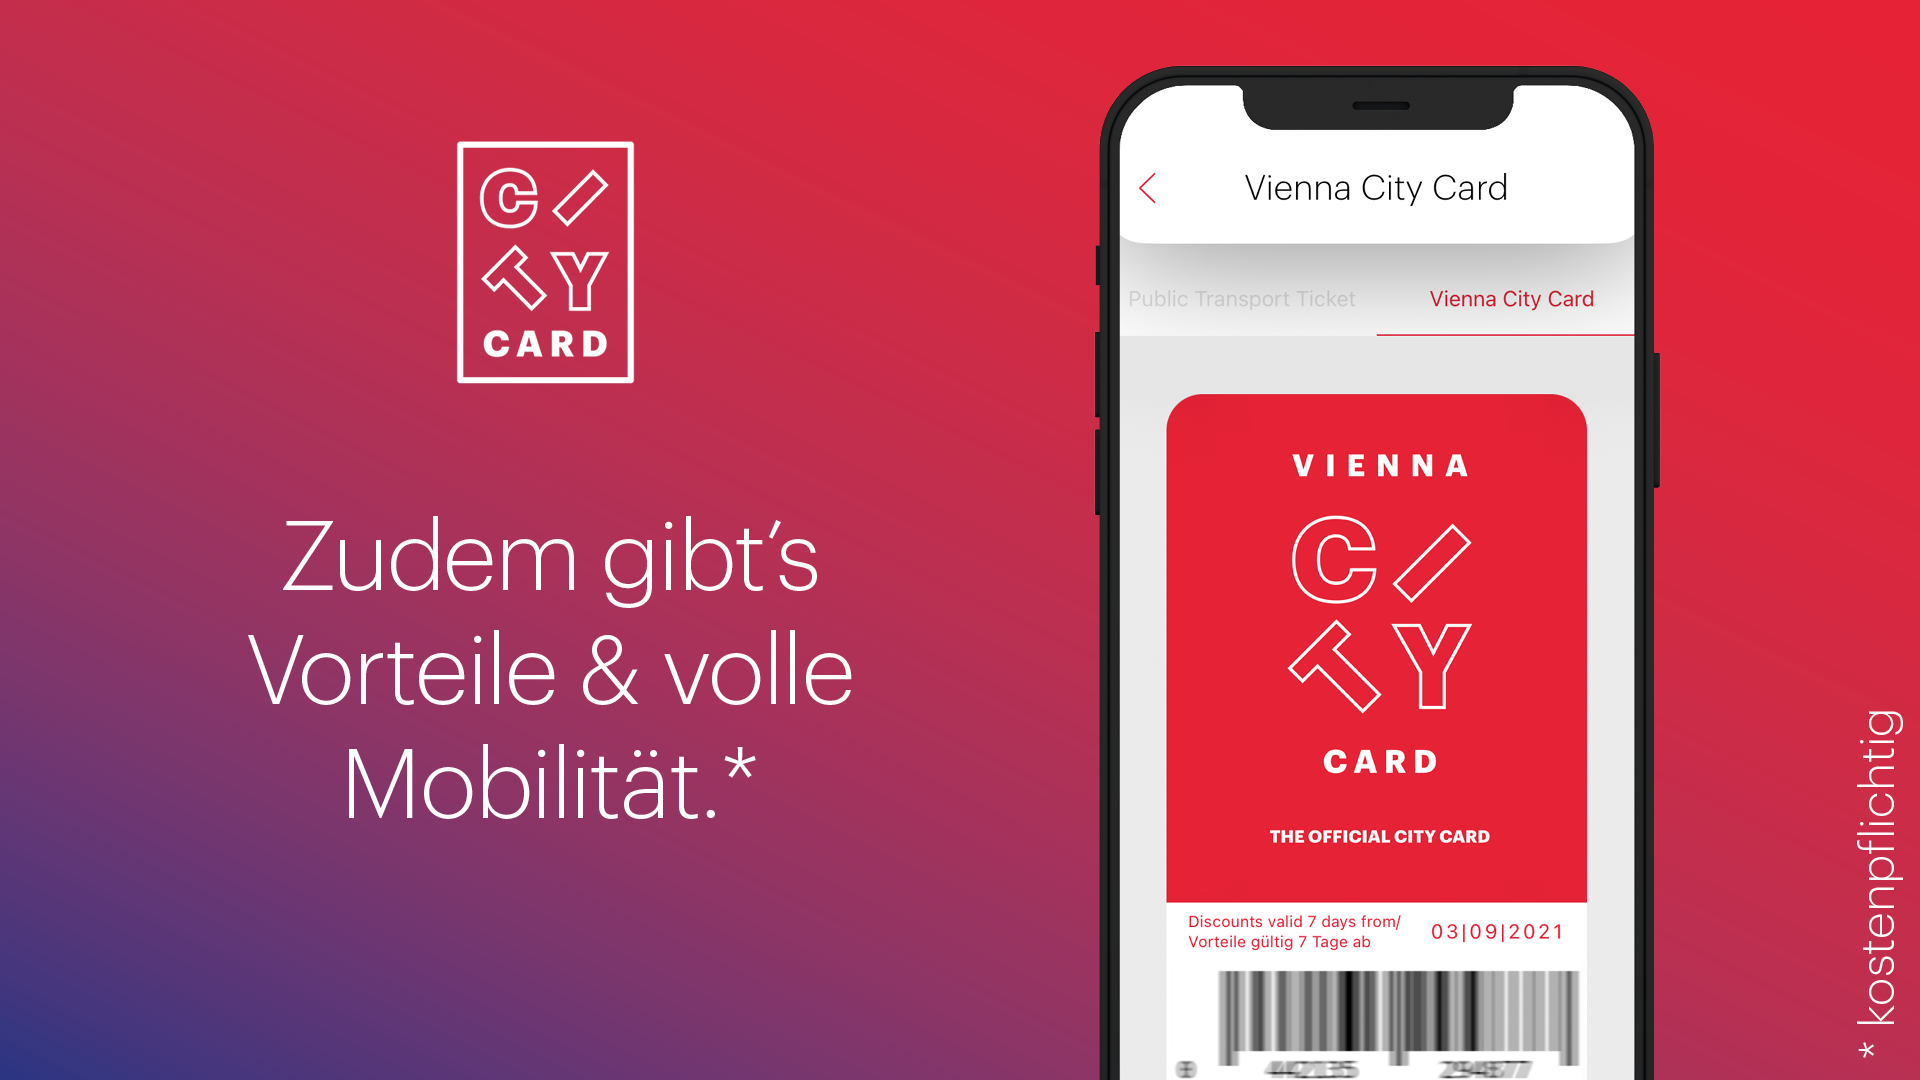 ivie App - Vienna Cit Card